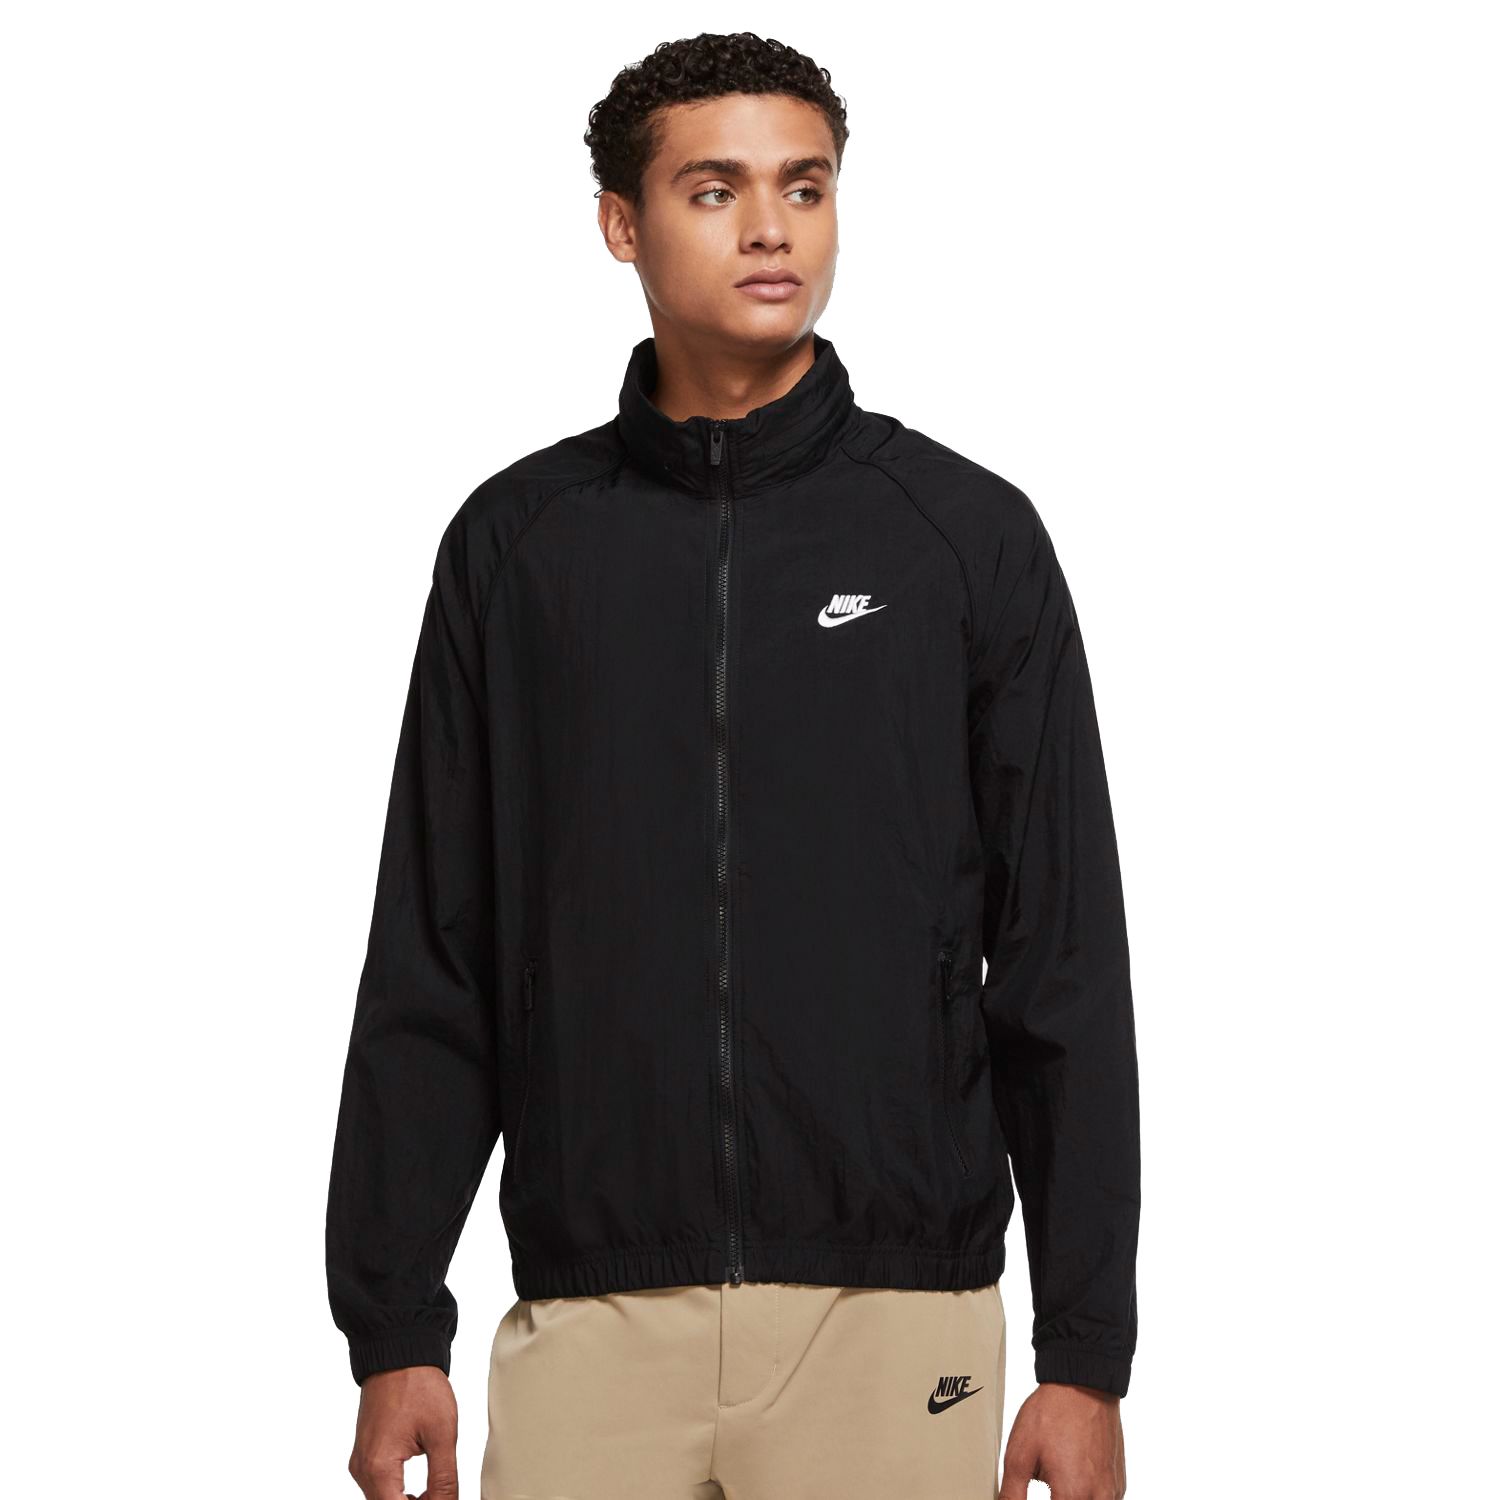 anchura Abrumador Nylon Nike Track Jacket on Sale, GET 58% OFF, sportsregras.com